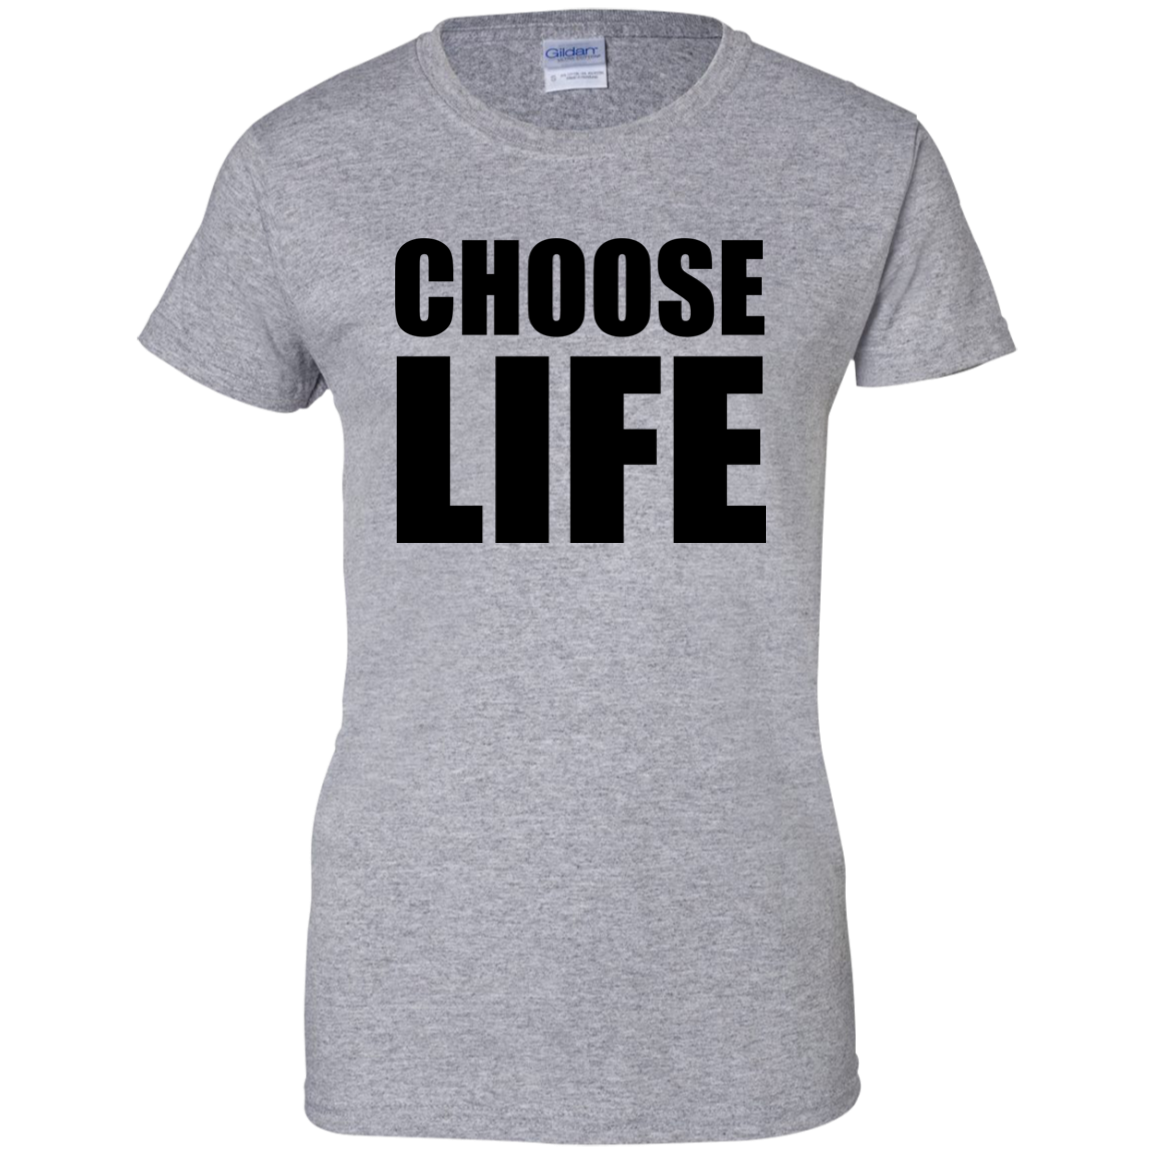 Choose Life. Choose your Life. Постер choose Life. Choose Life t Shirt.